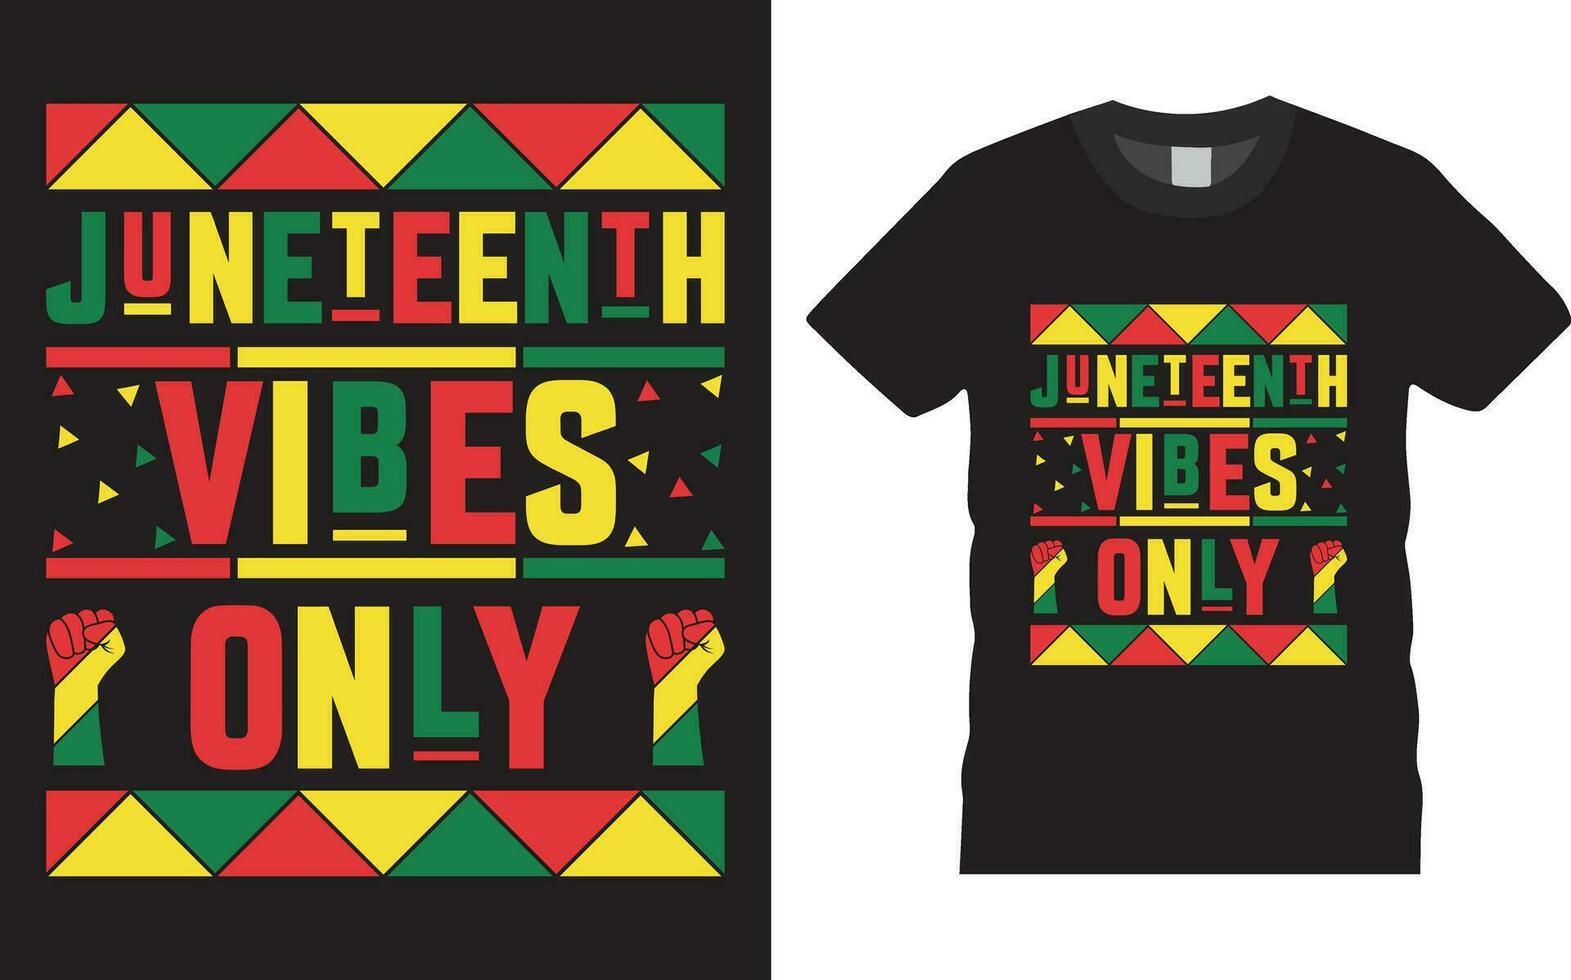 juneteenth 1865 Amerikaans zwart mensen historisch vrijheid dag t-shirt ontwerp vector